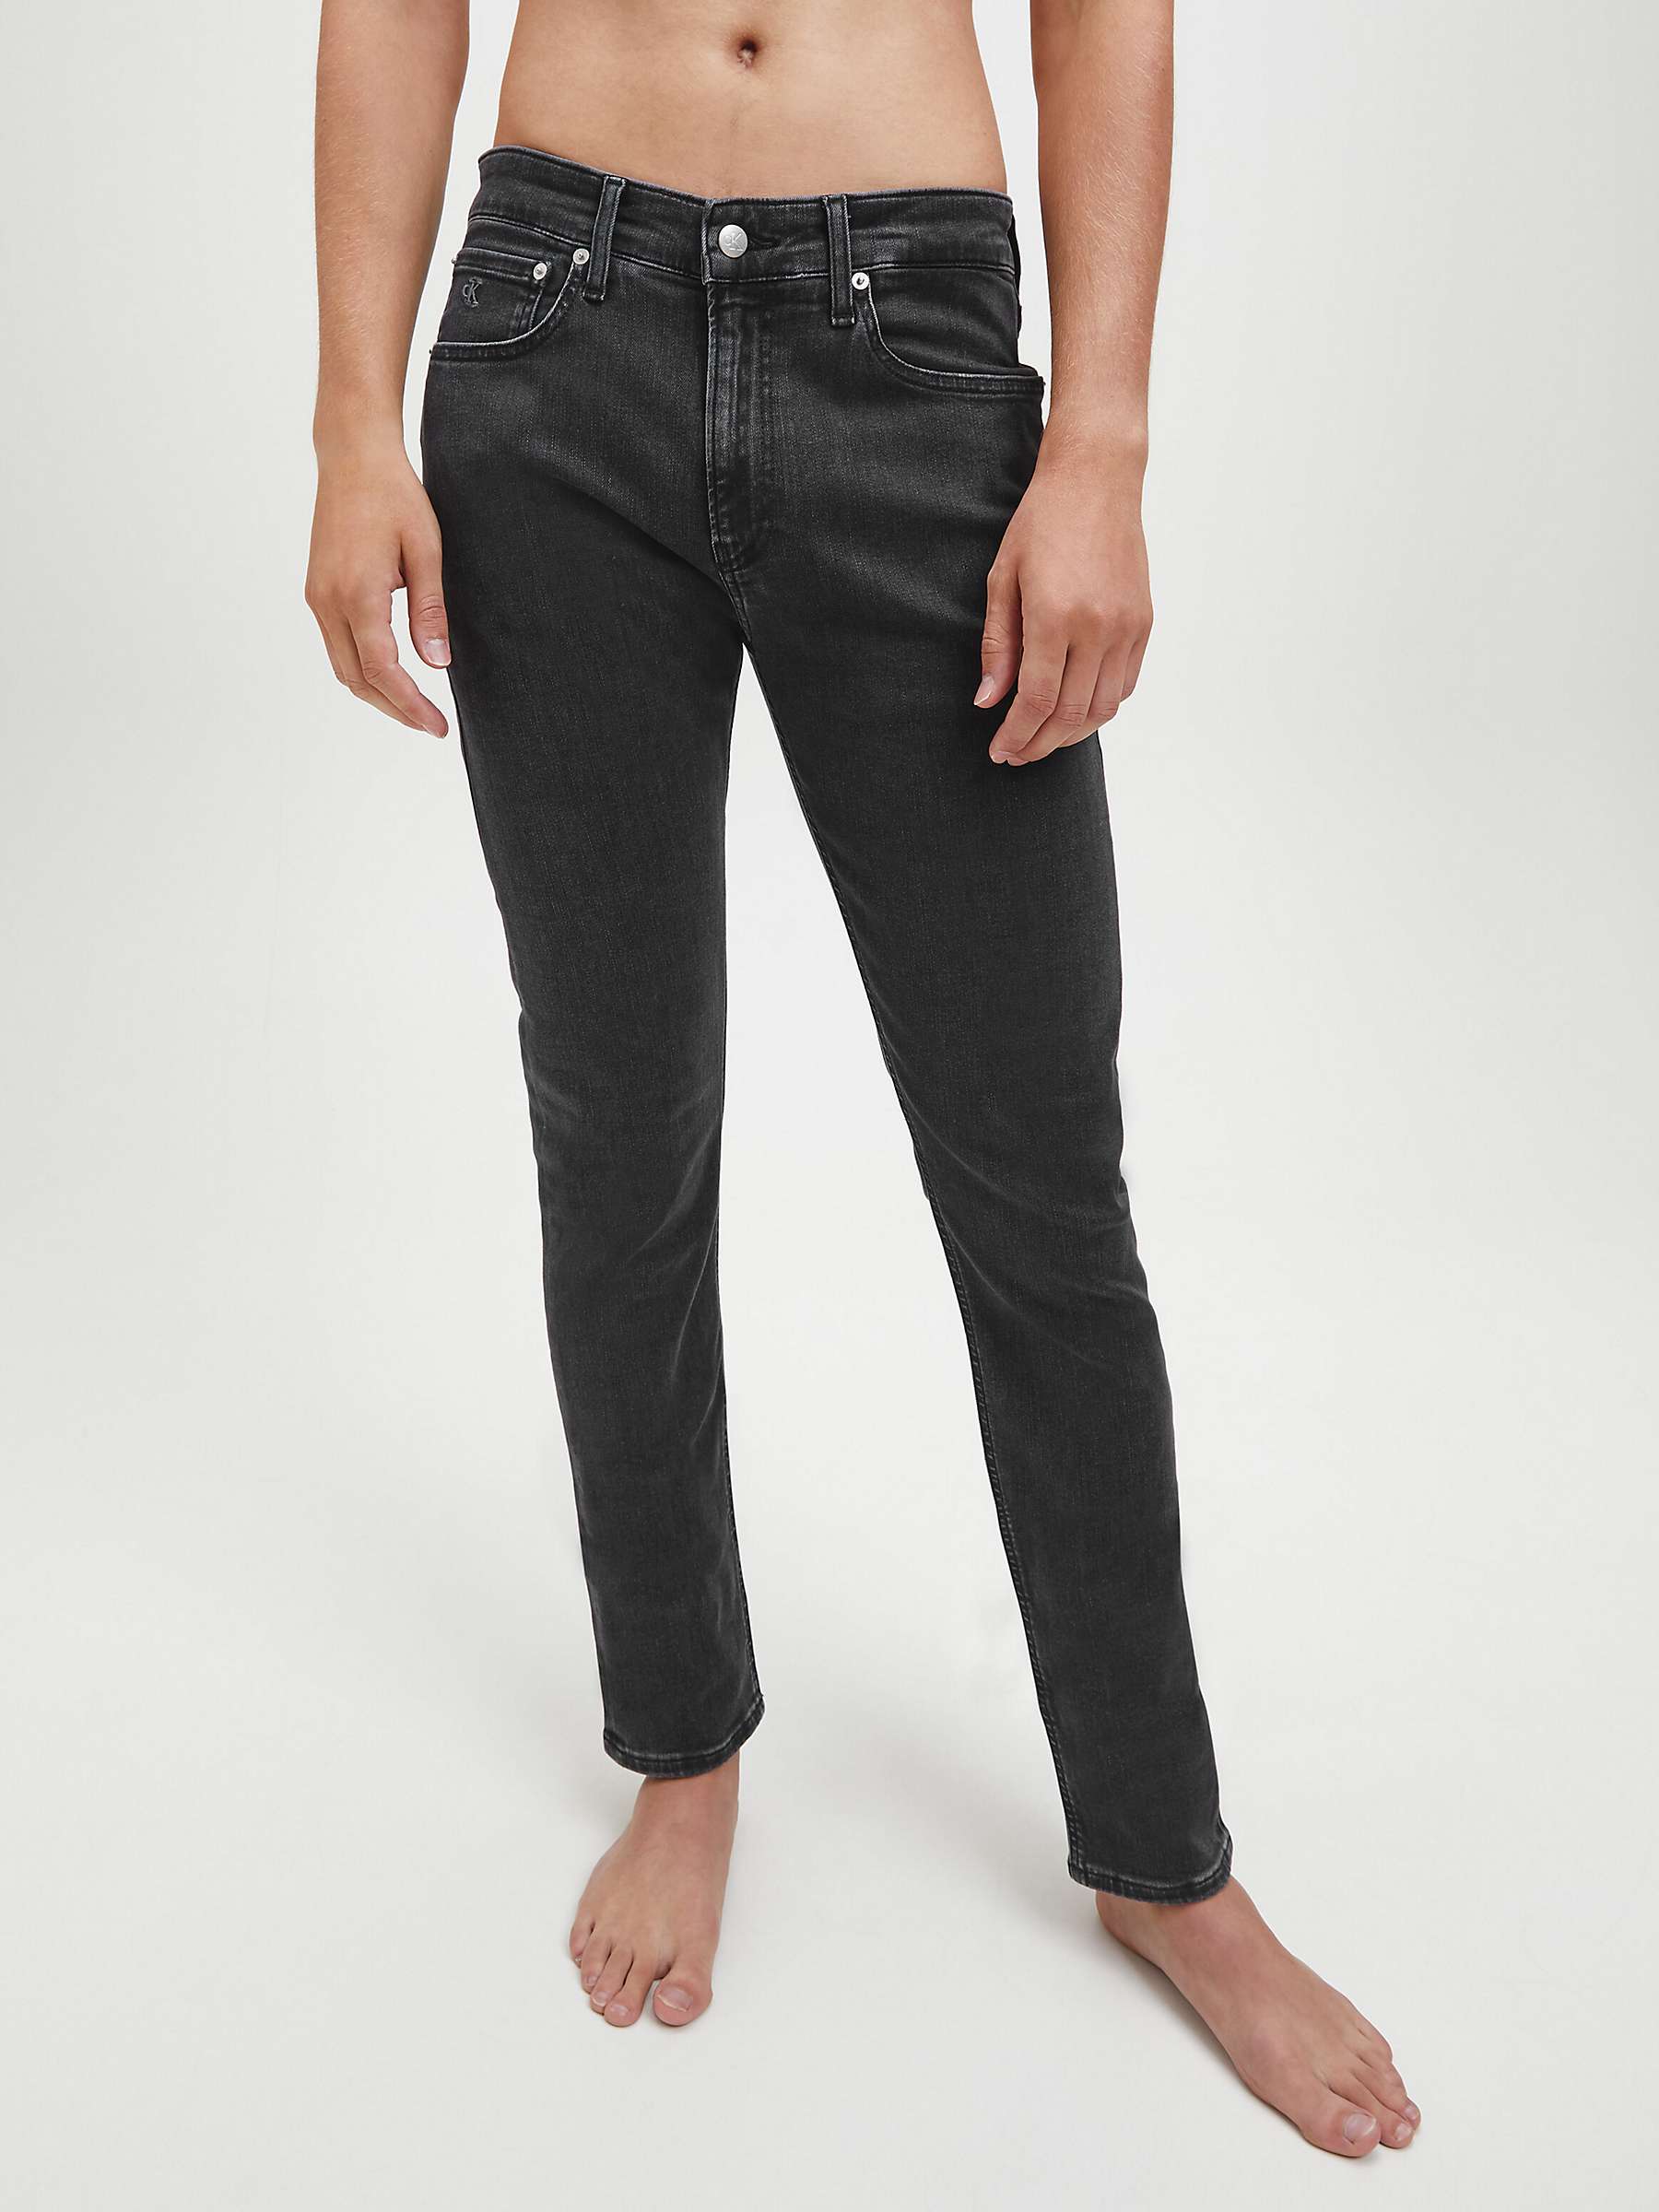 Calvin Klein Jeans Skinny Fit Jeans, Grey at John Lewis & Partners